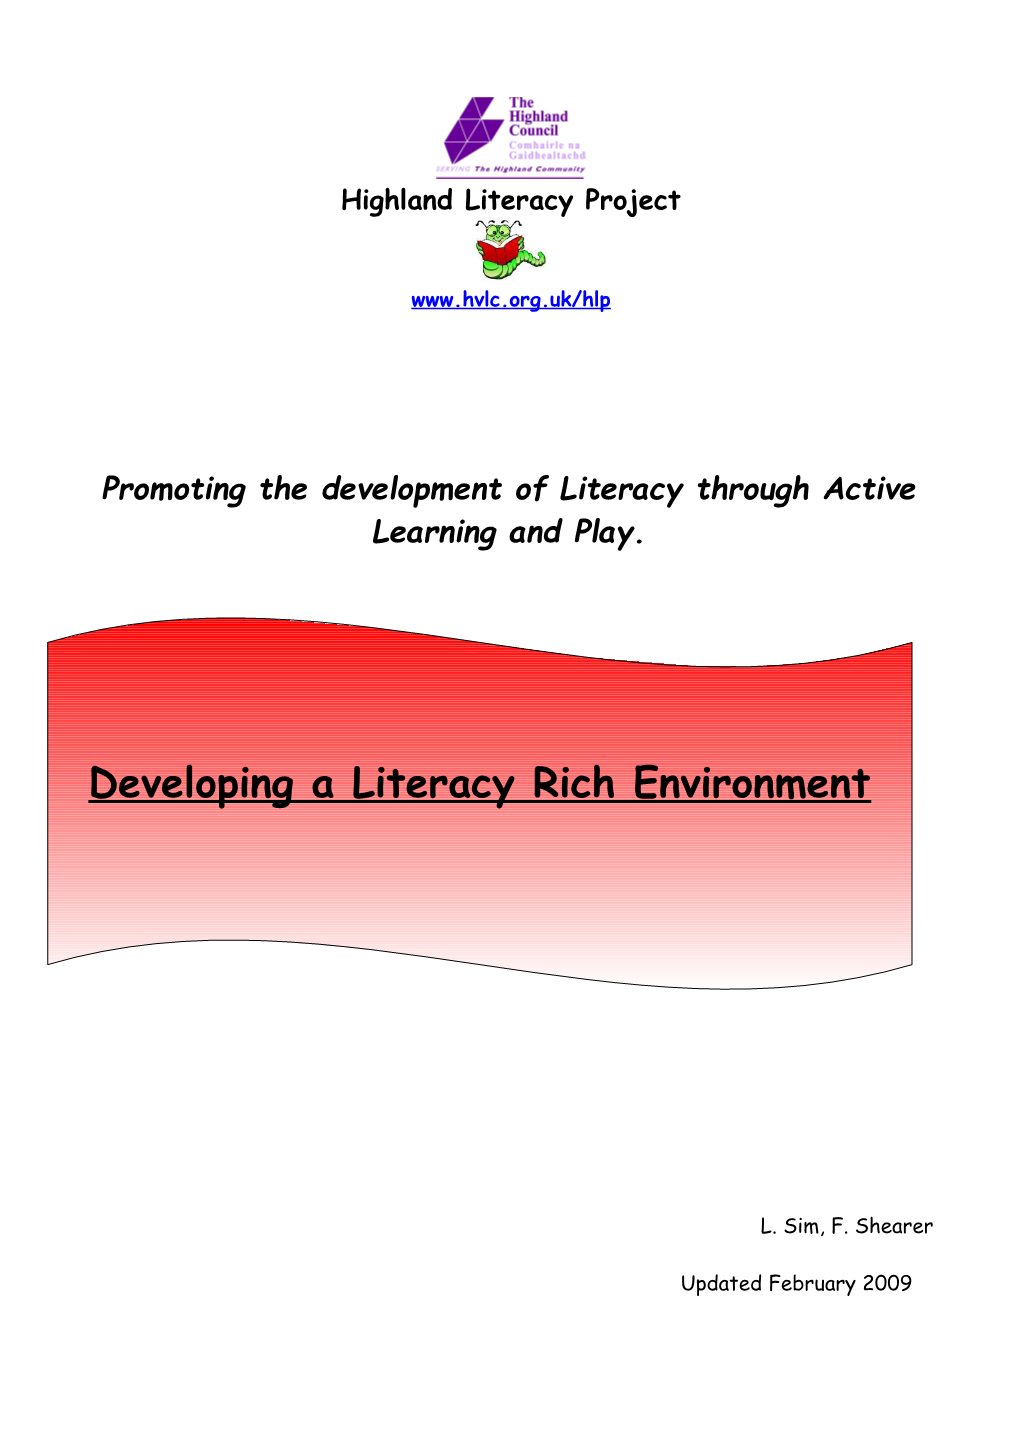 Creating a Literacy Rich Environment